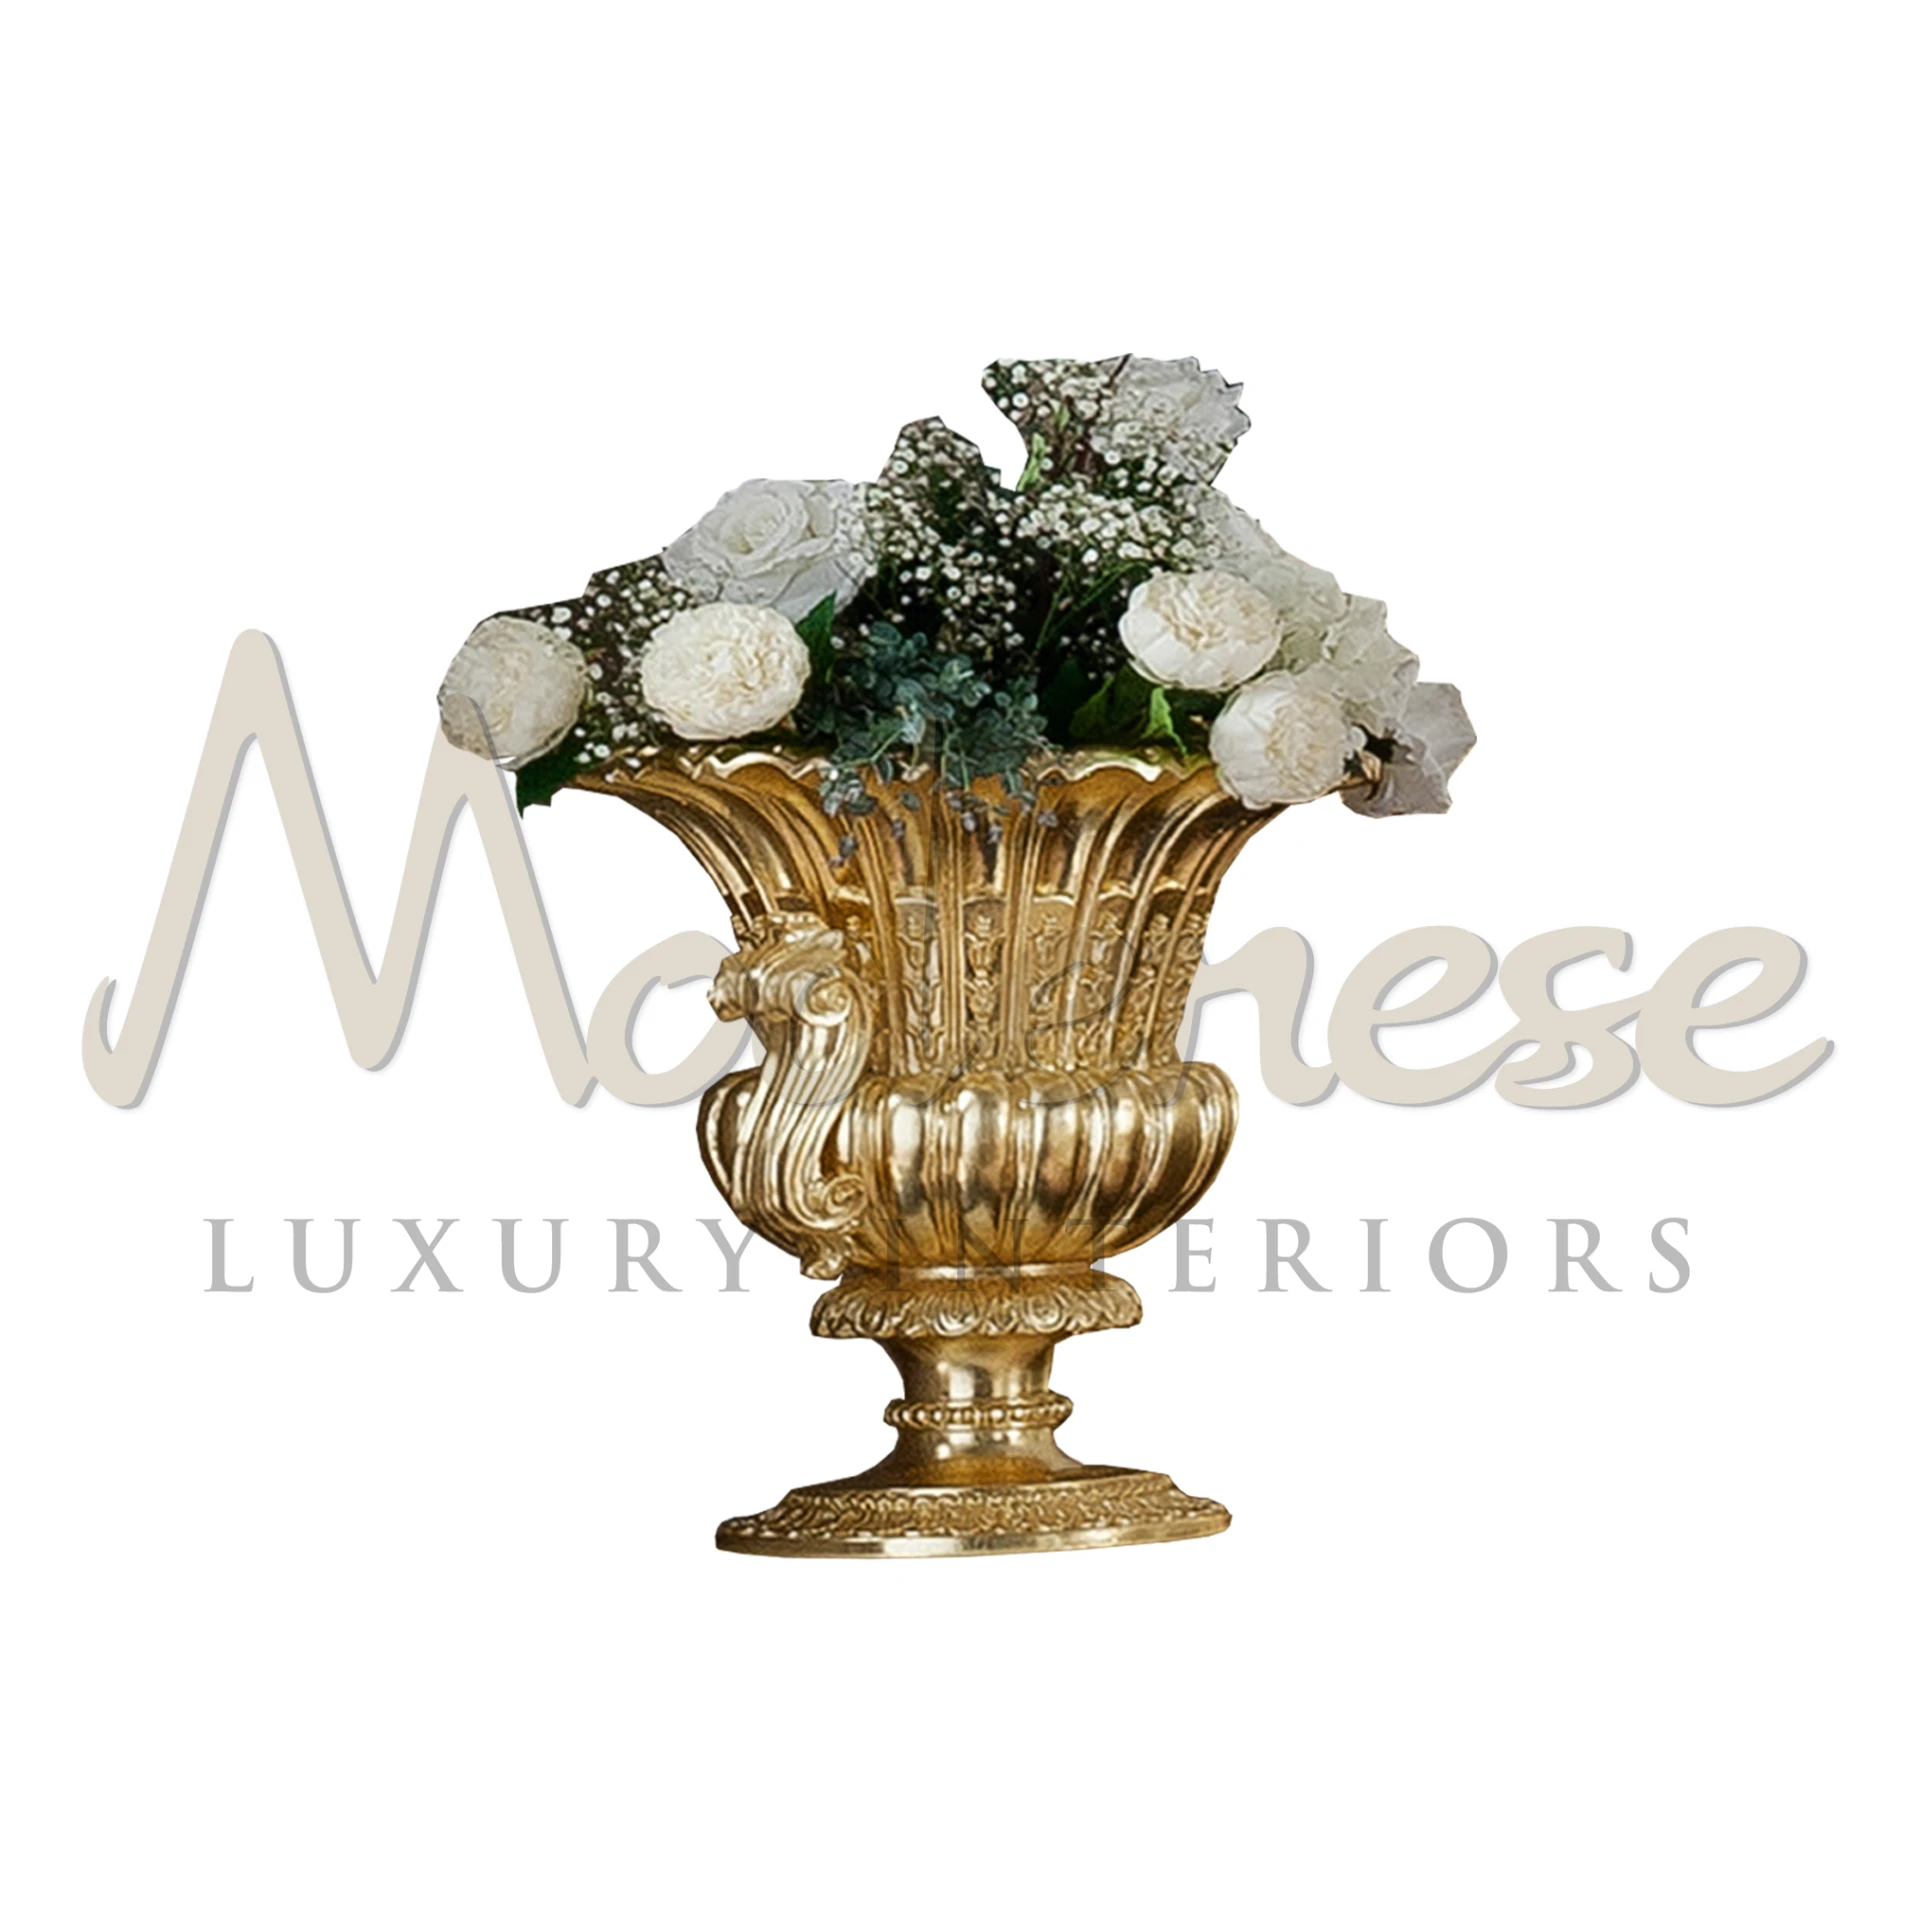 Heritage Vase in gold leaf finishing by Modenese, luxury interior decoration
